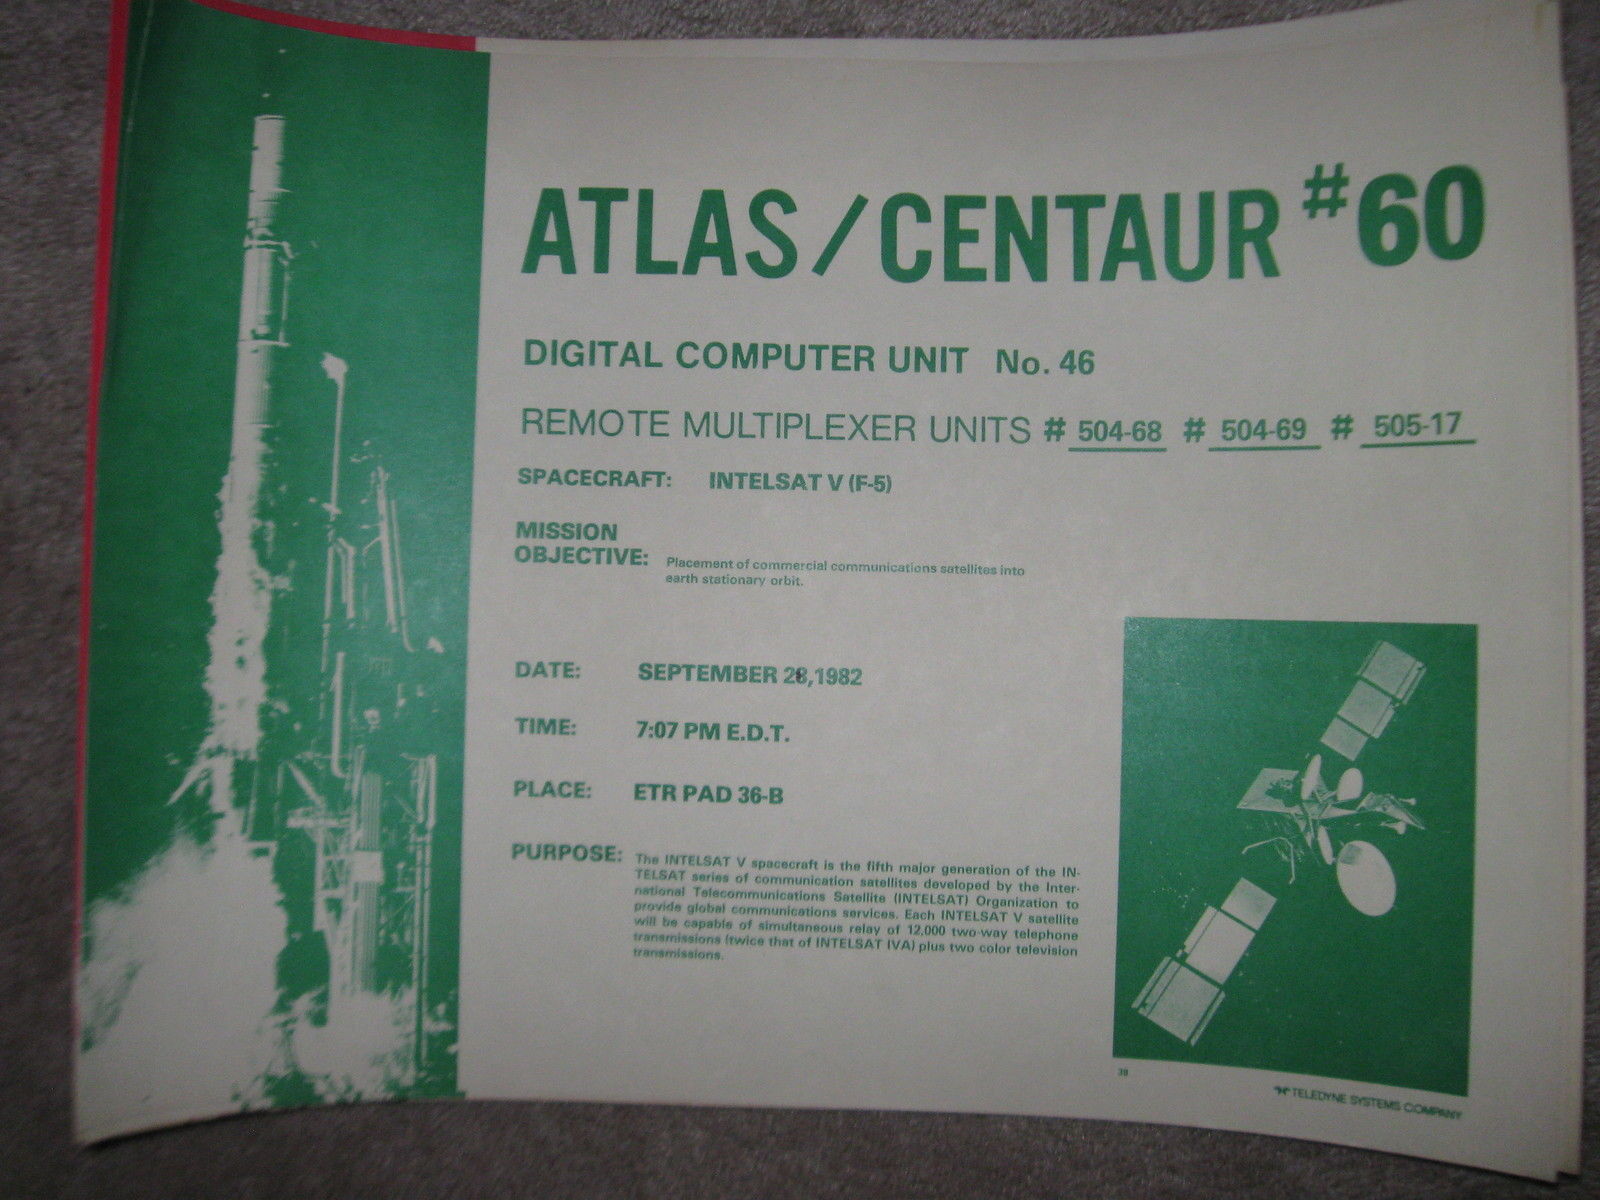 Atlas / Centaur #60 launch poster